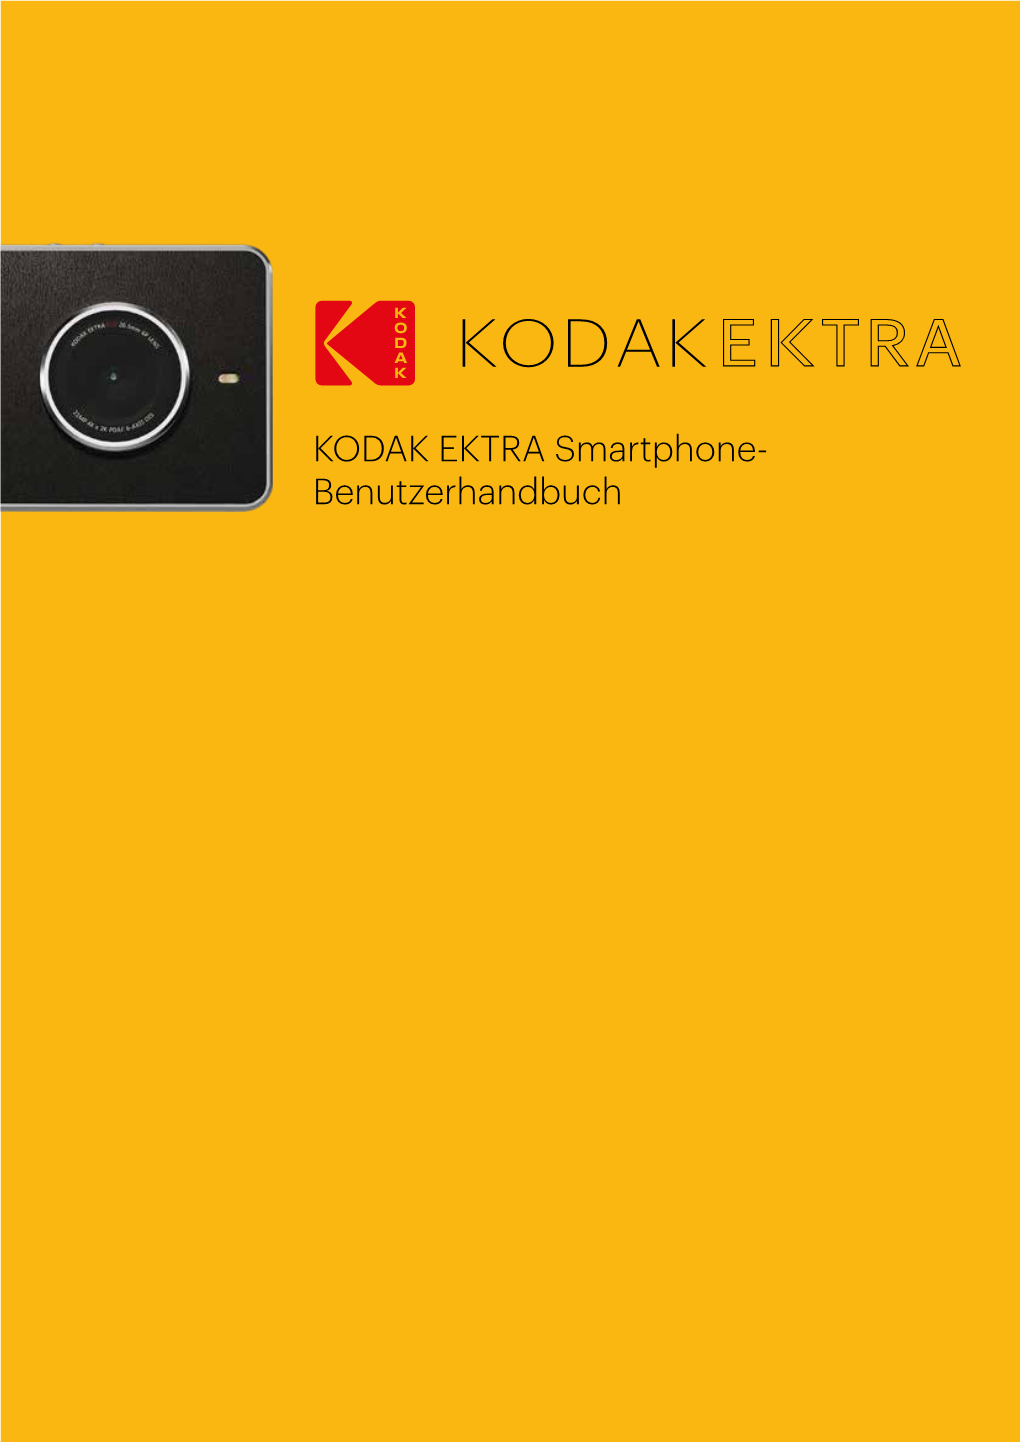 KODAK EKTRA Smartphone- Benutzerhandbuch